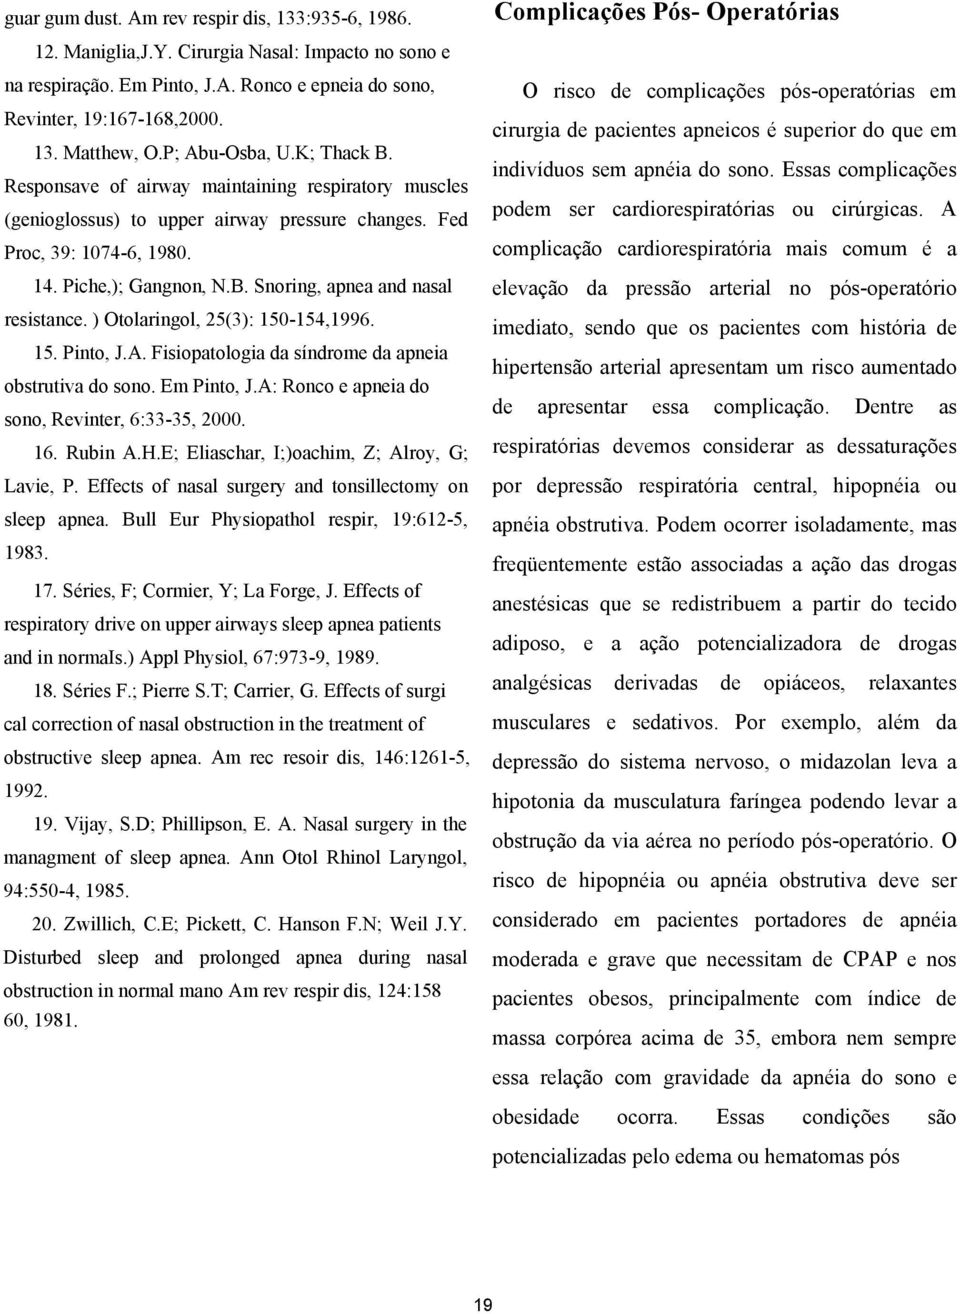 ) Otolaringol, 25(3): 150-154,1996. 15. Pinto, J.A. Fisiopatologia da síndrome da apneia obstrutiva do sono. Em Pinto, J.A: Ronco e apneia do sono, Revinter, 6:33-35, 2000. 16. Rubin A.H.